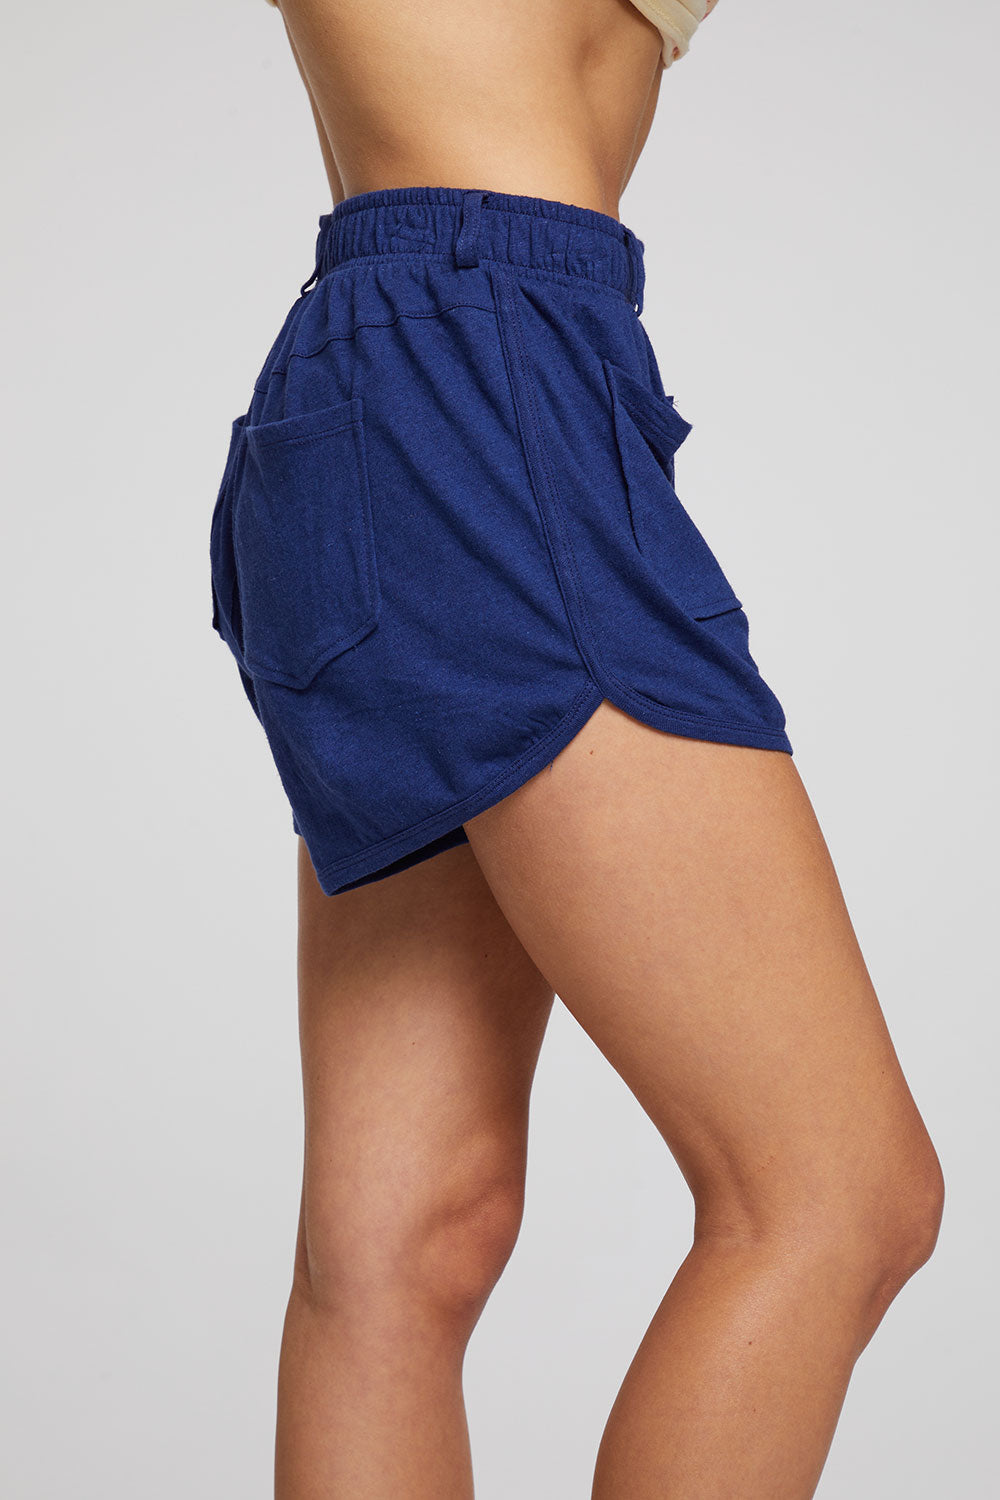 Cetara French Blue Shorts WOMENS chaserbrand